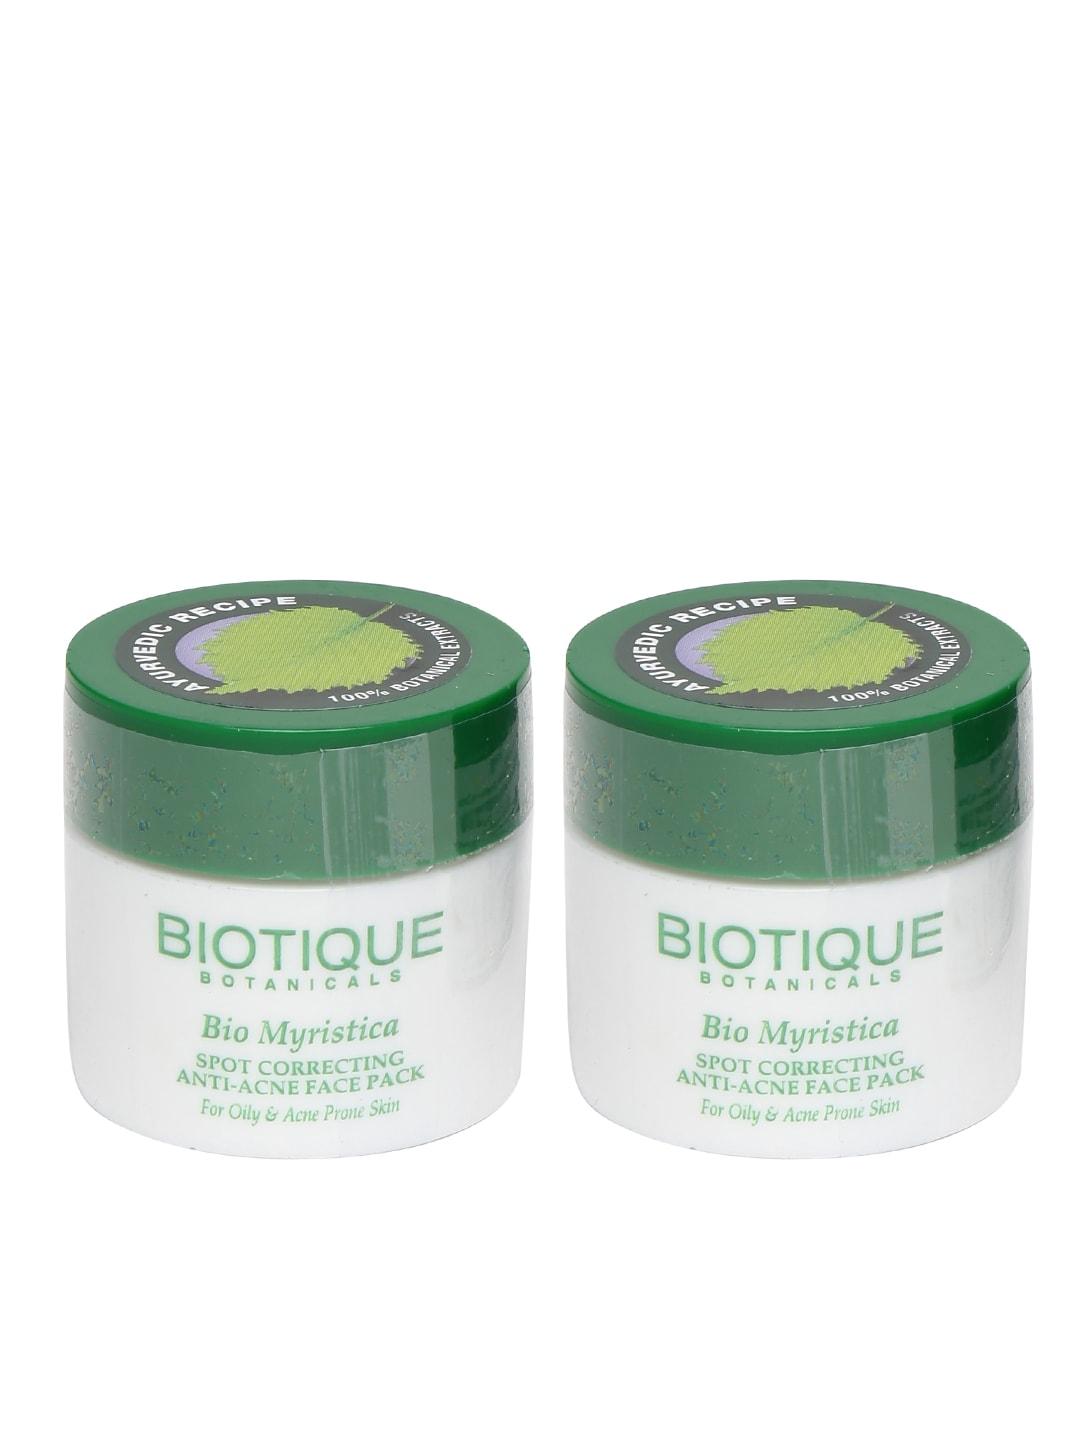 biotique unisex set of 2 bio myristica spot corrector anti-acne face packs